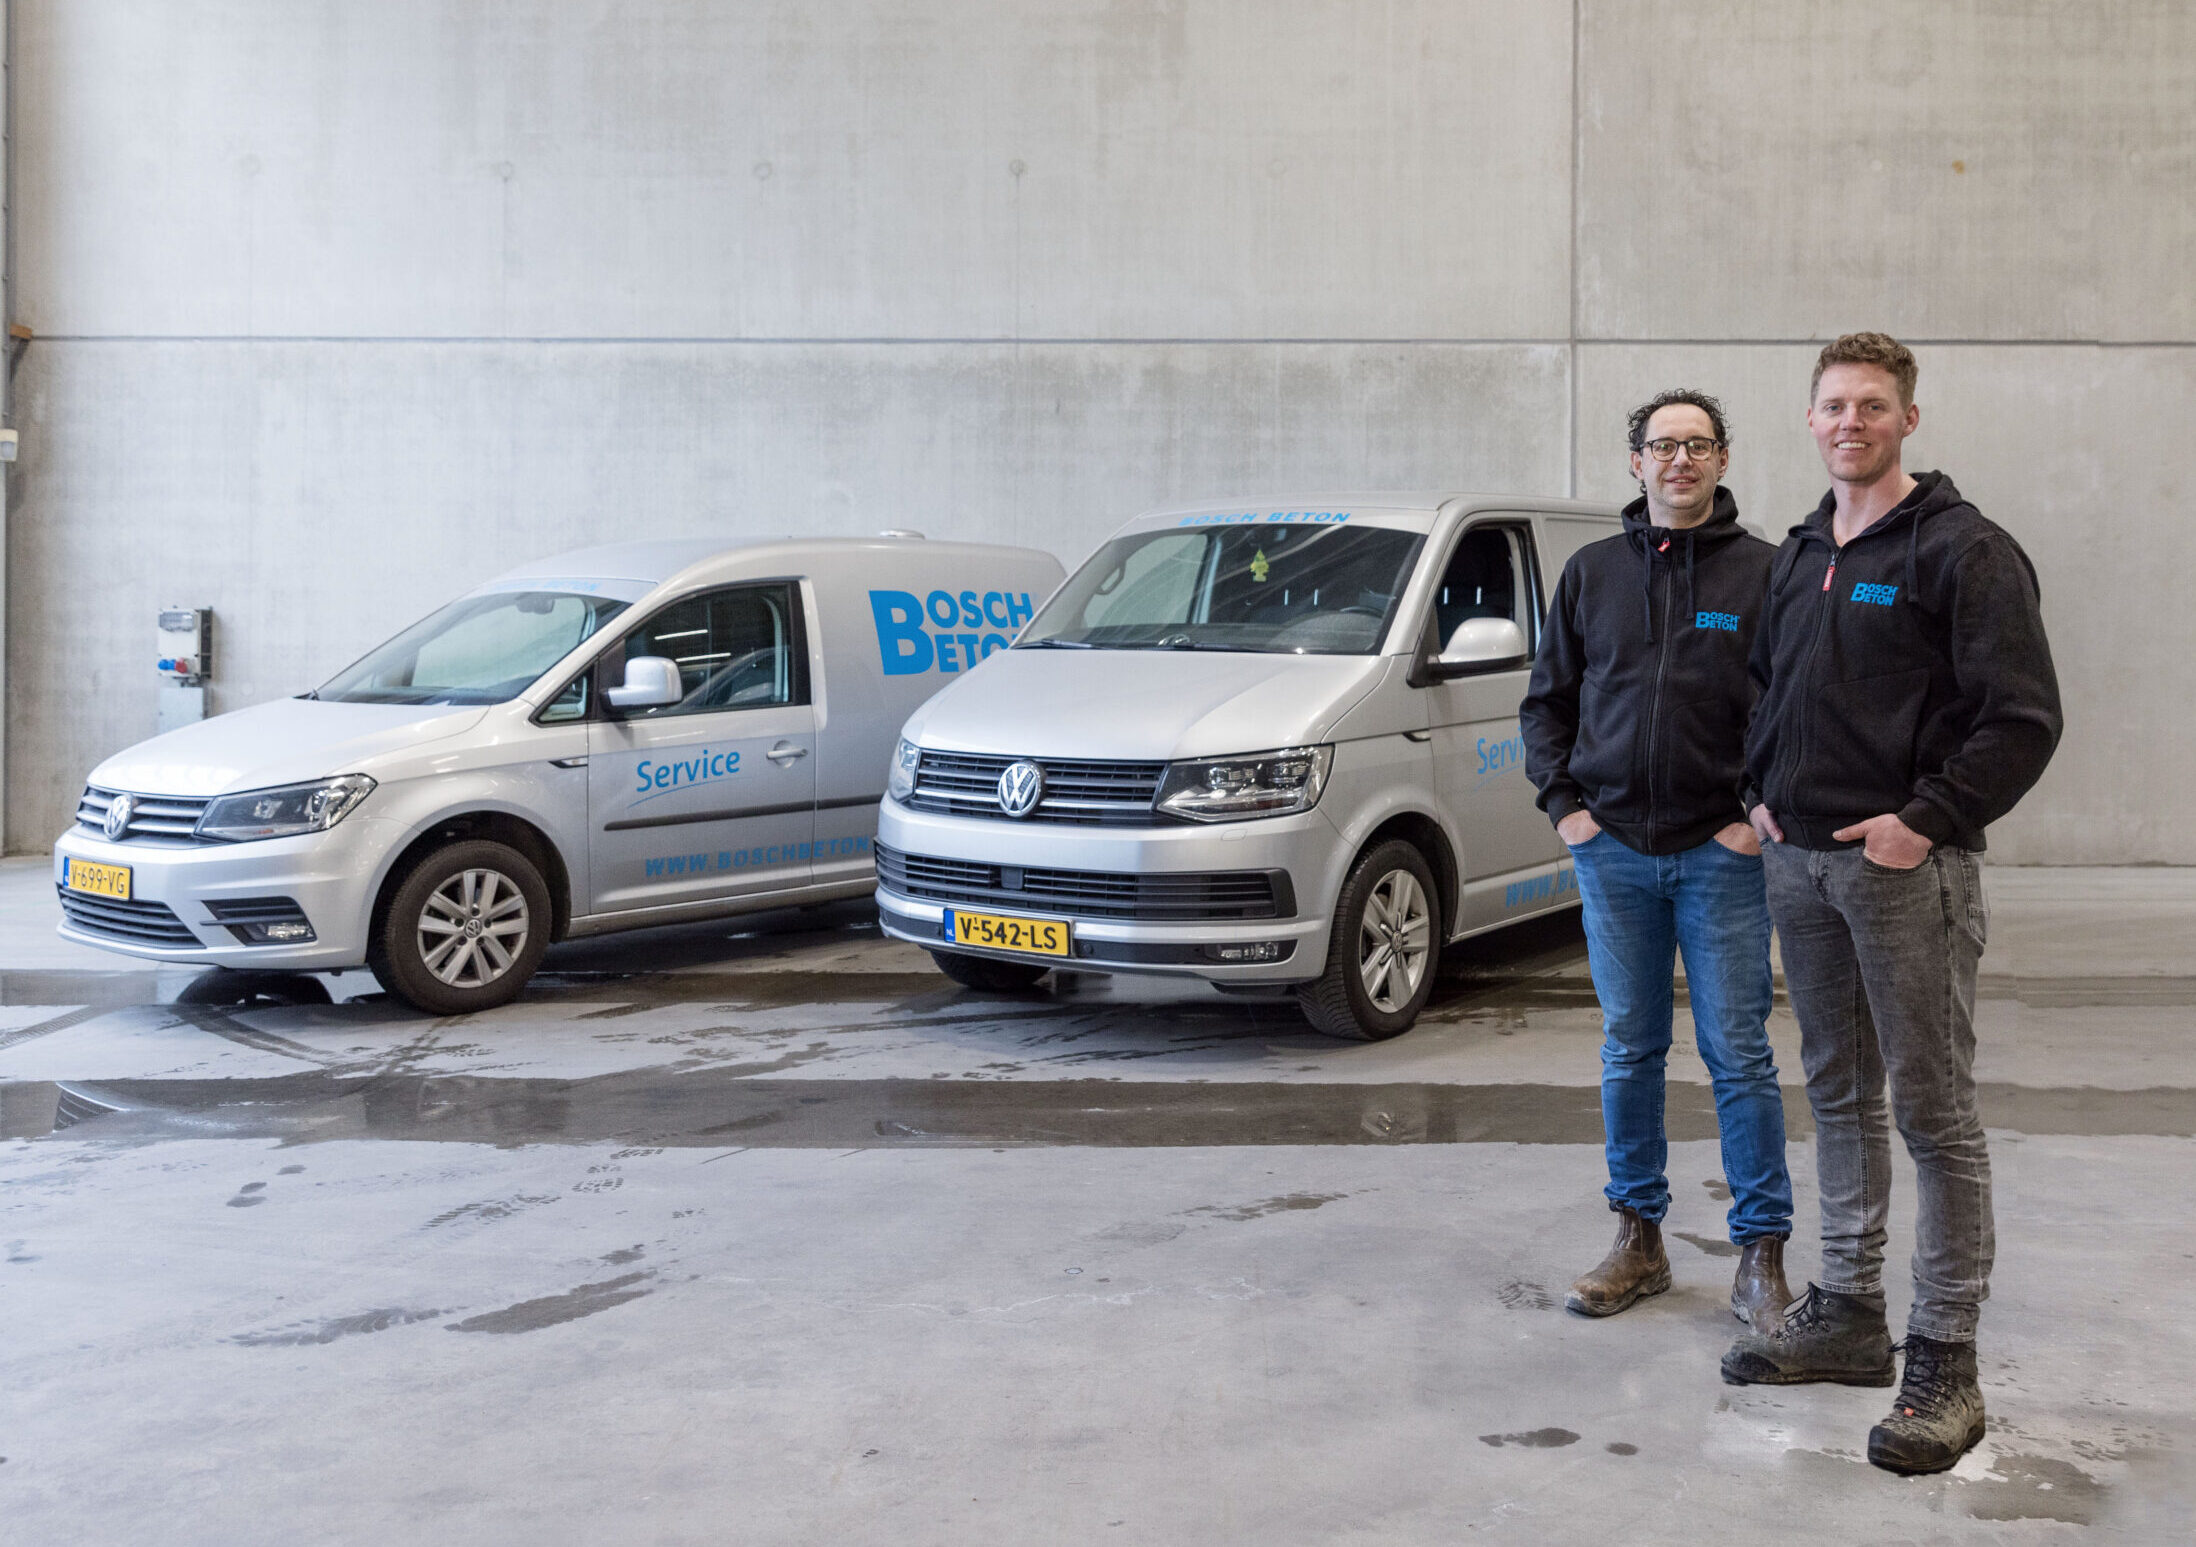 Bosch Beton Serviceteam